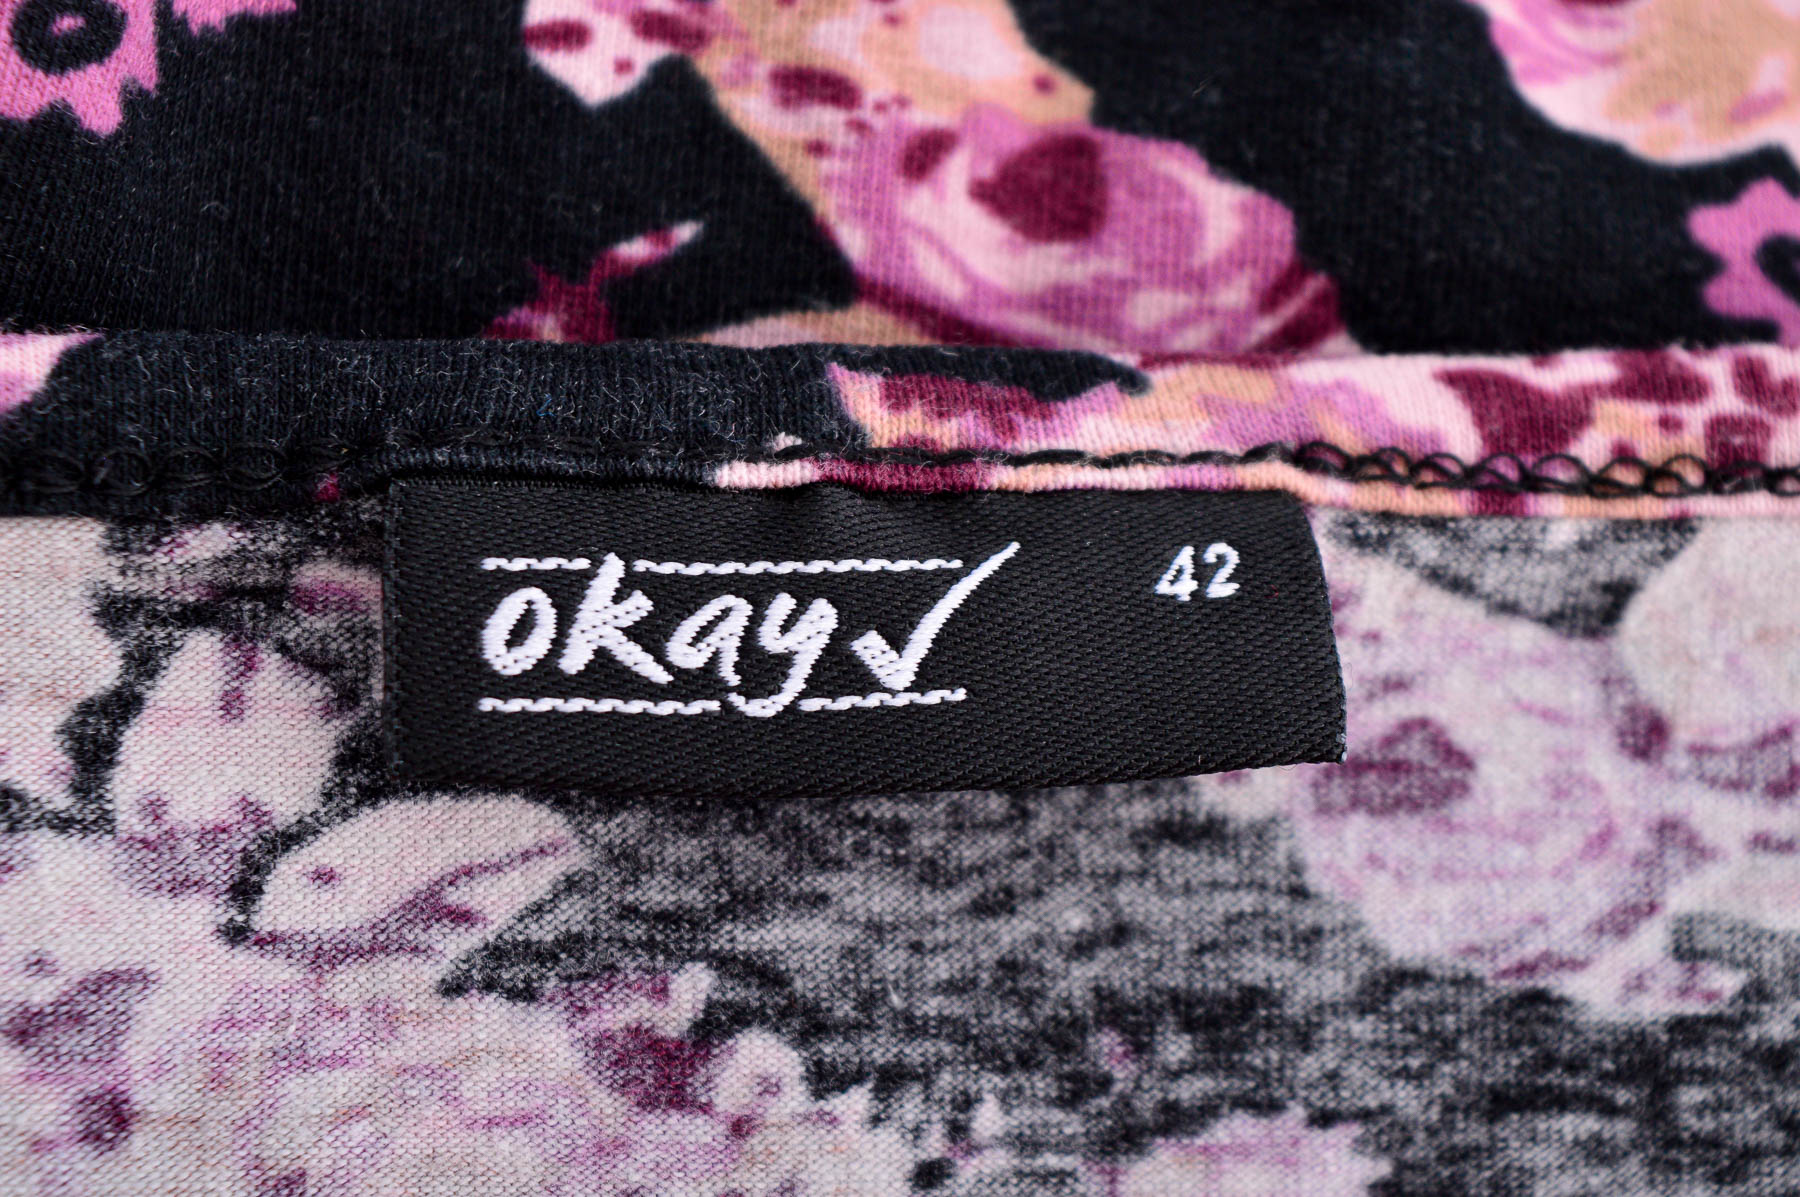 Women's t-shirt - Okay - 2